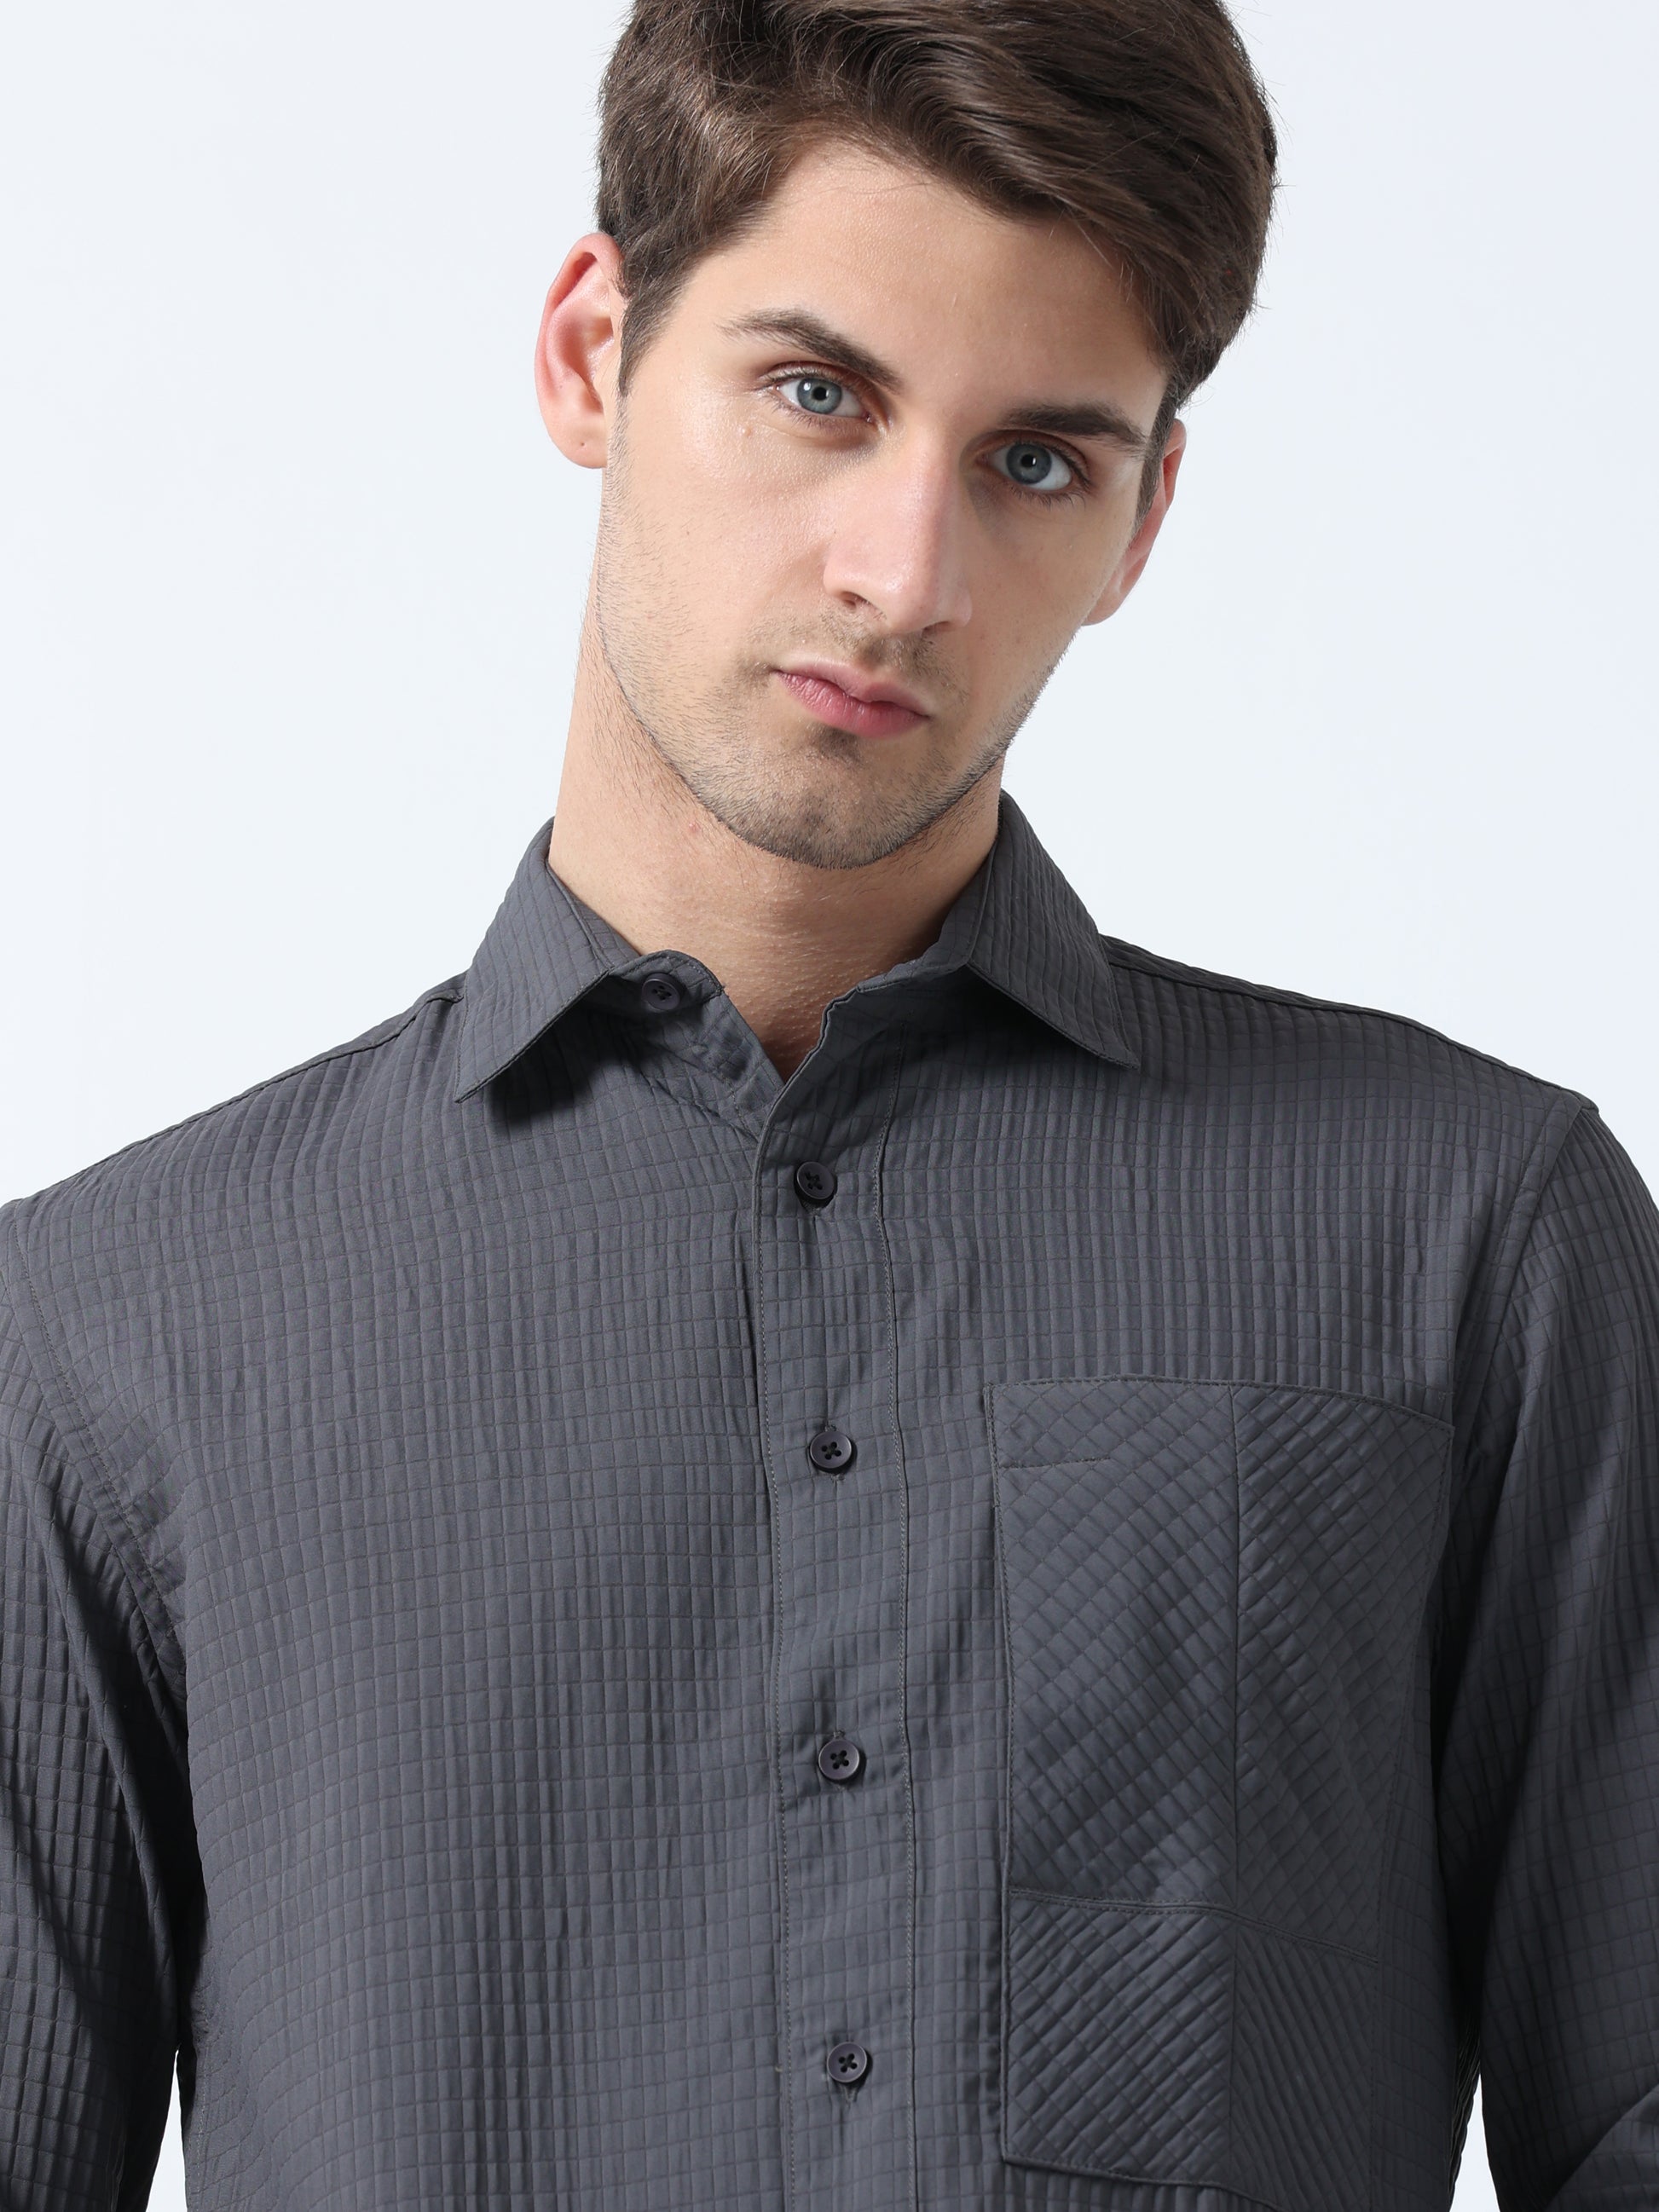 Dark Grey Imported Fabric Stylish Pocket Twist Plain Shirt